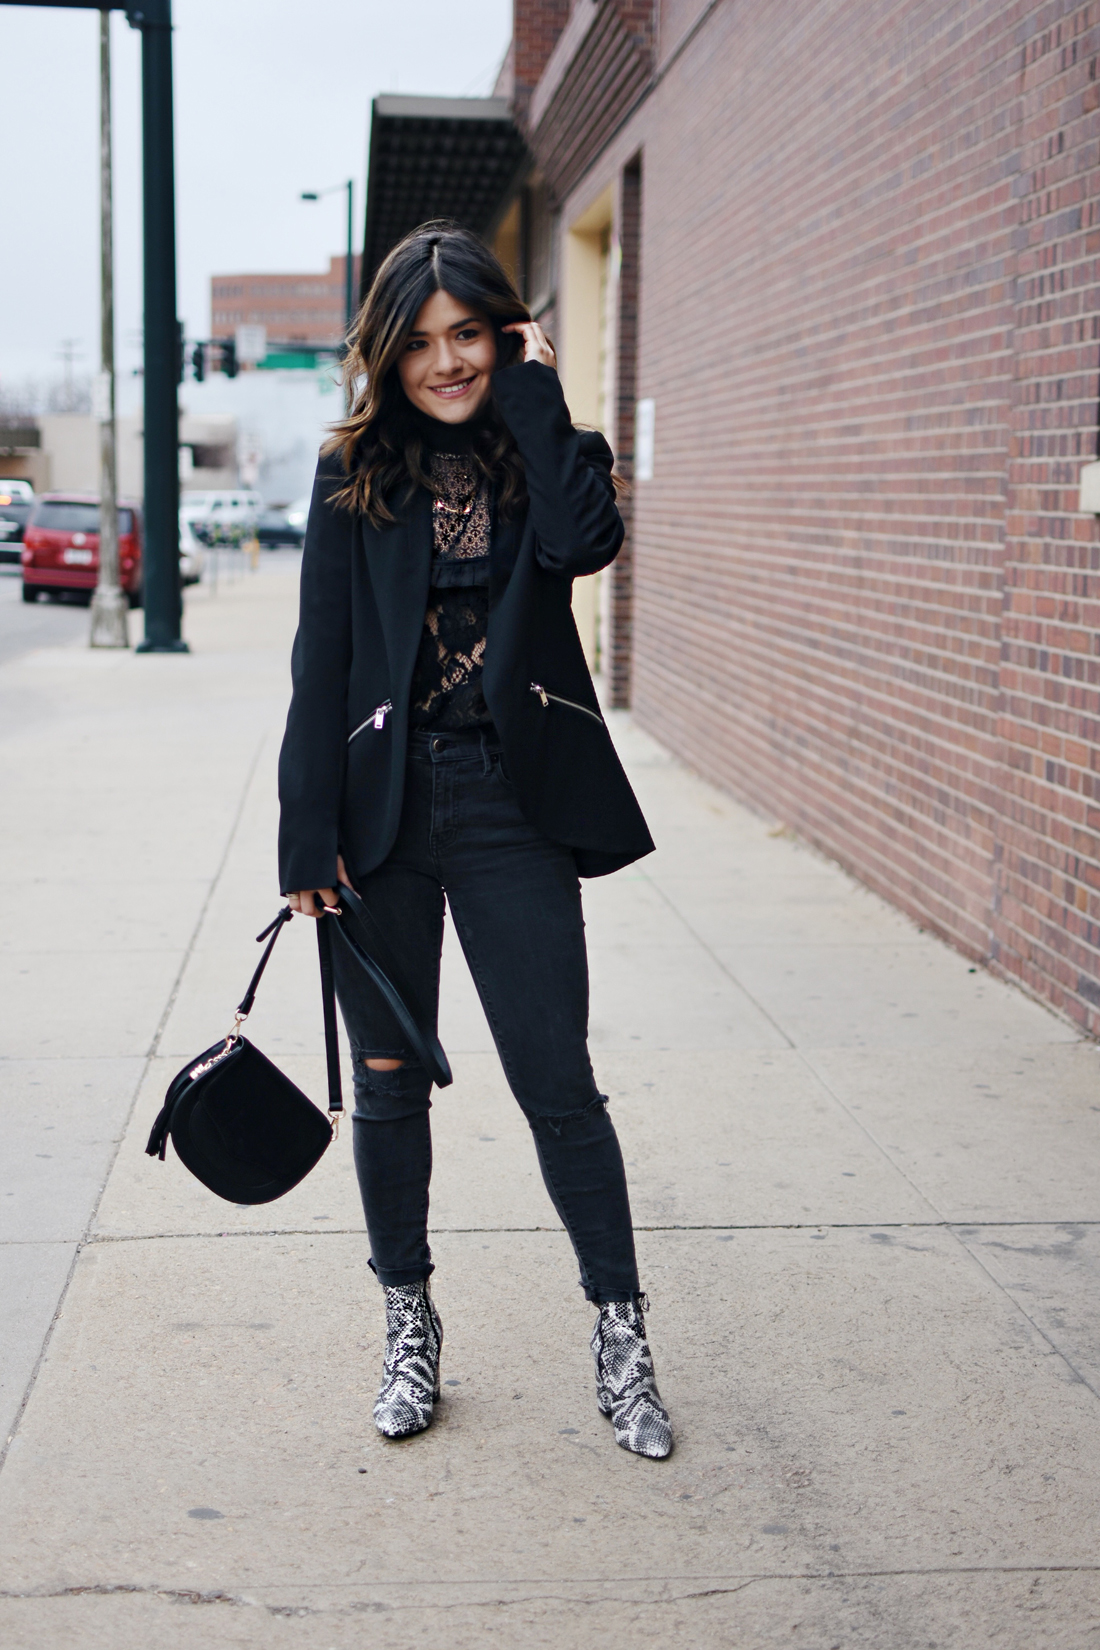 Carolina Hellal of Chic Talk wearing an Asos black lace top, Madewell jeans, Public Desire snake print boots, BCBG blazer 